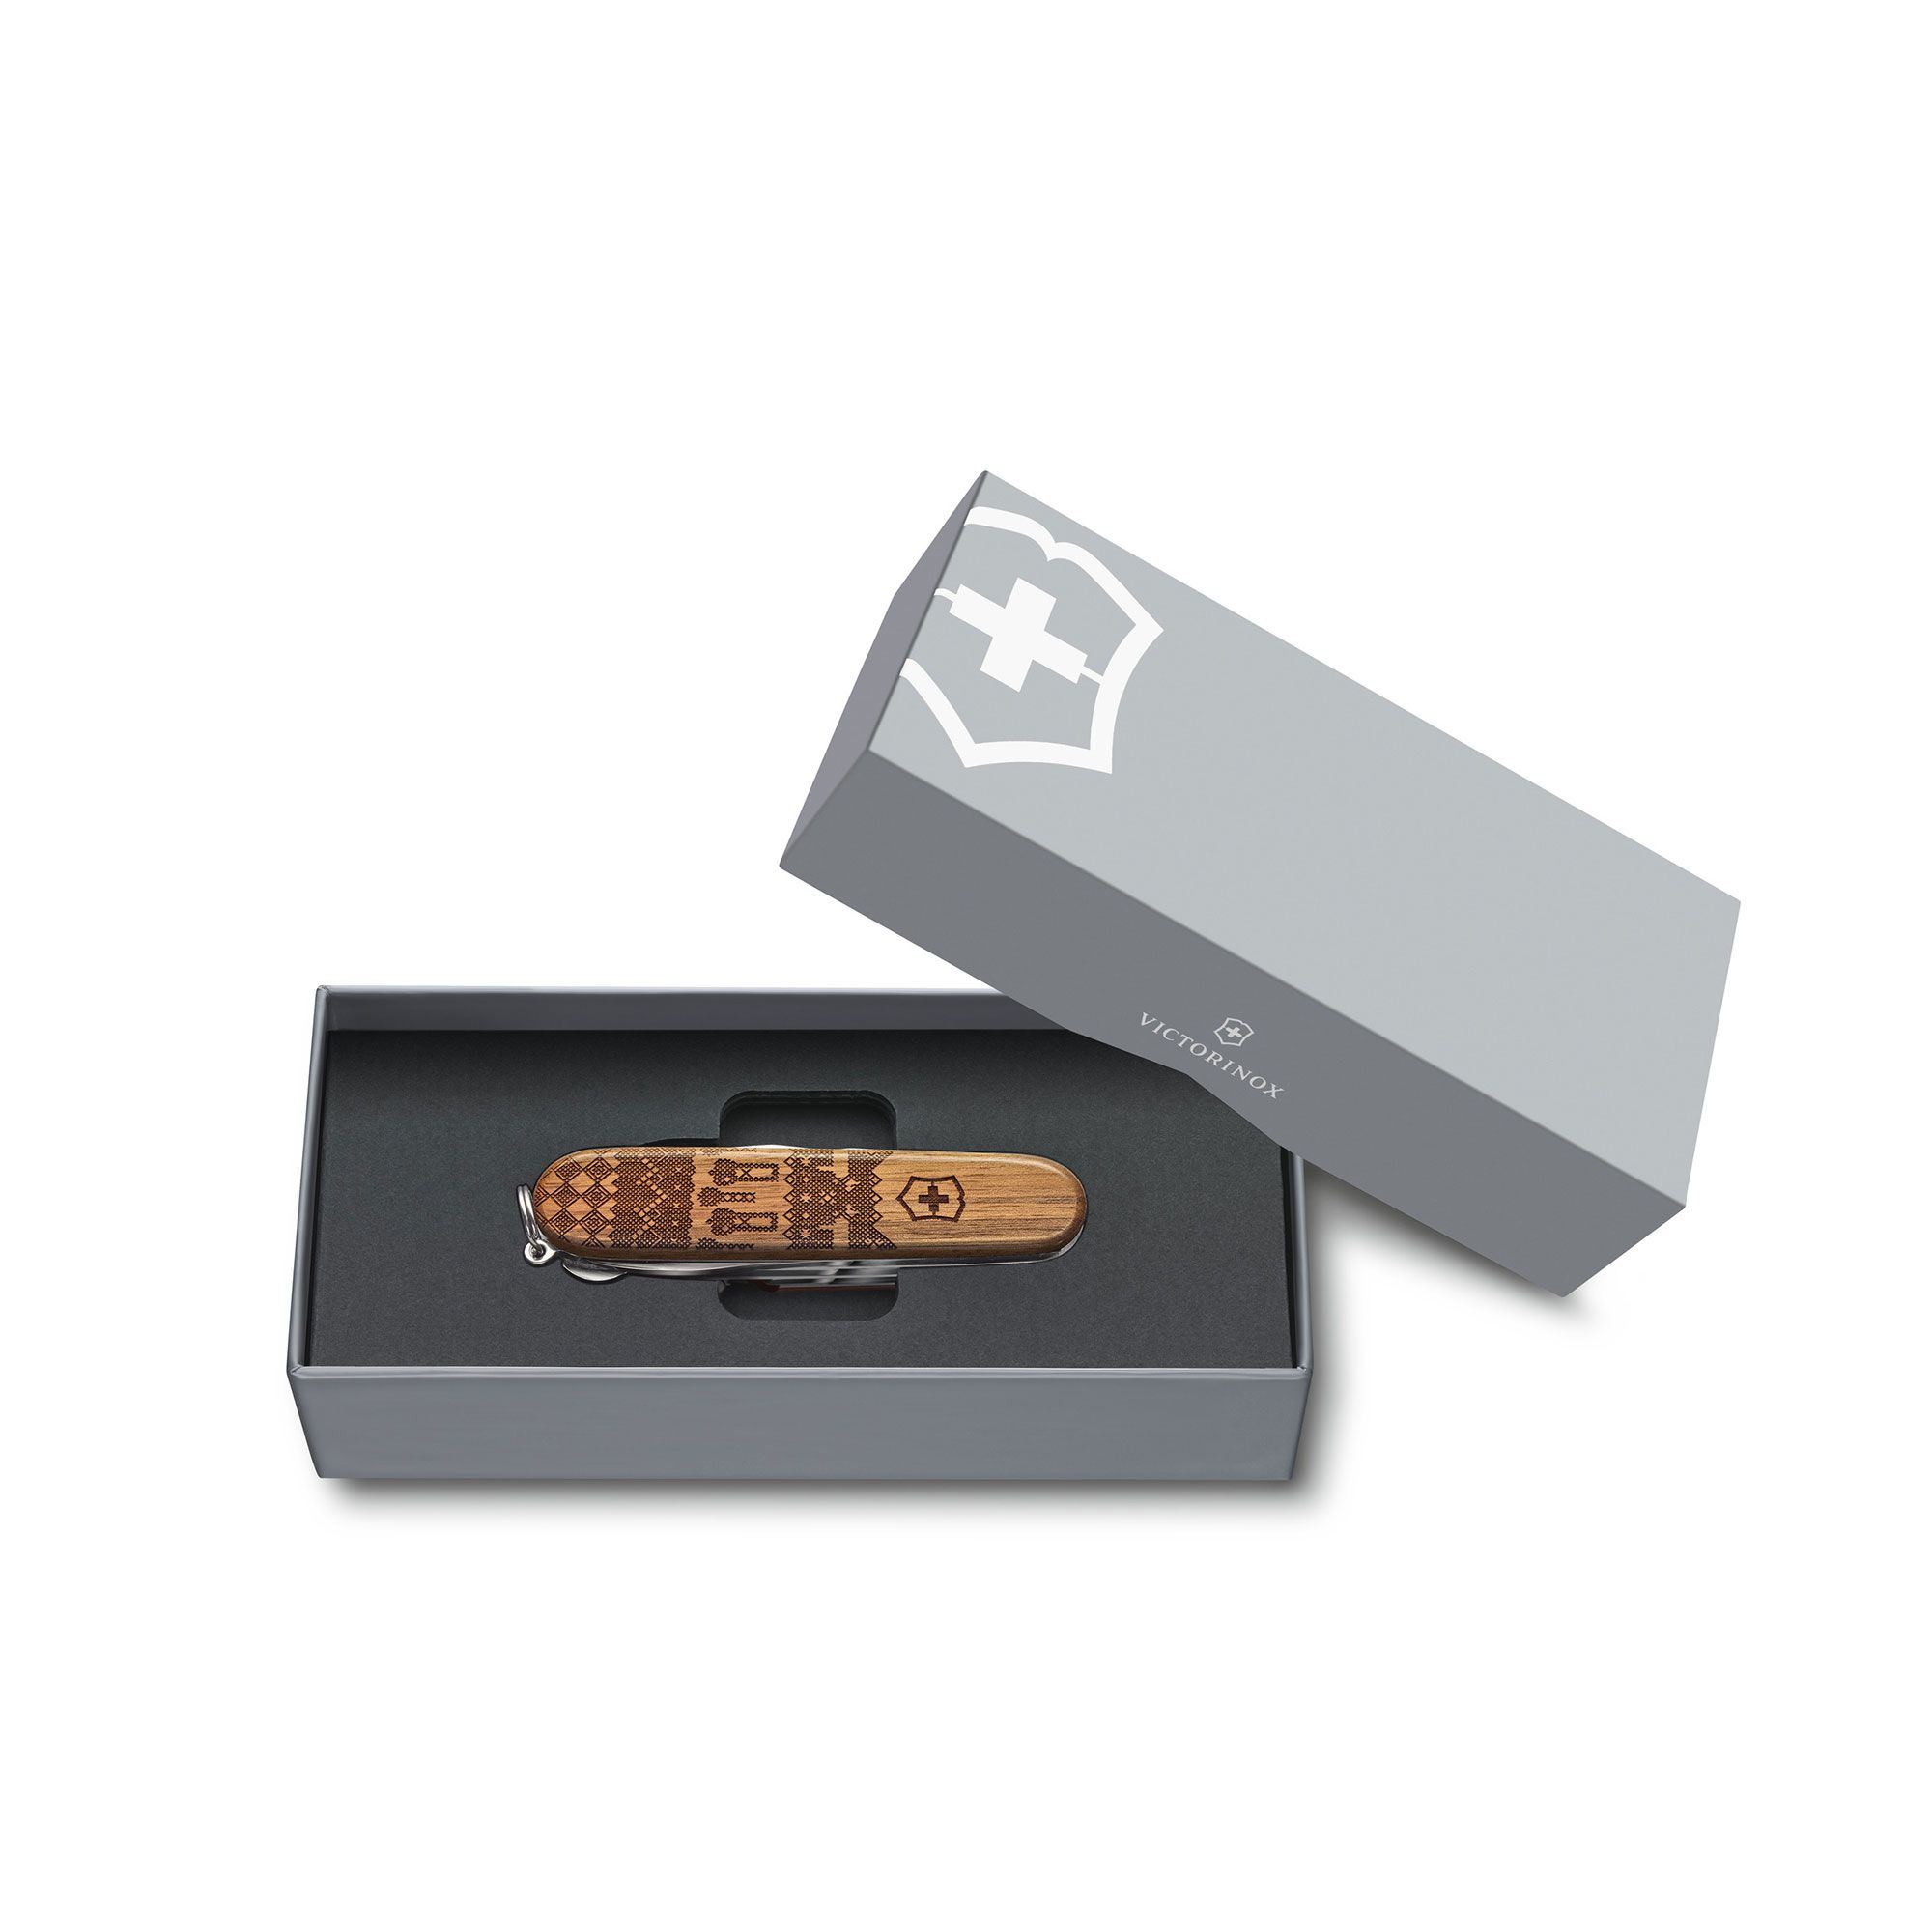 Victorinox - Pocket knife "Companion Wood Swiss Spirit Limited Edition 2023"